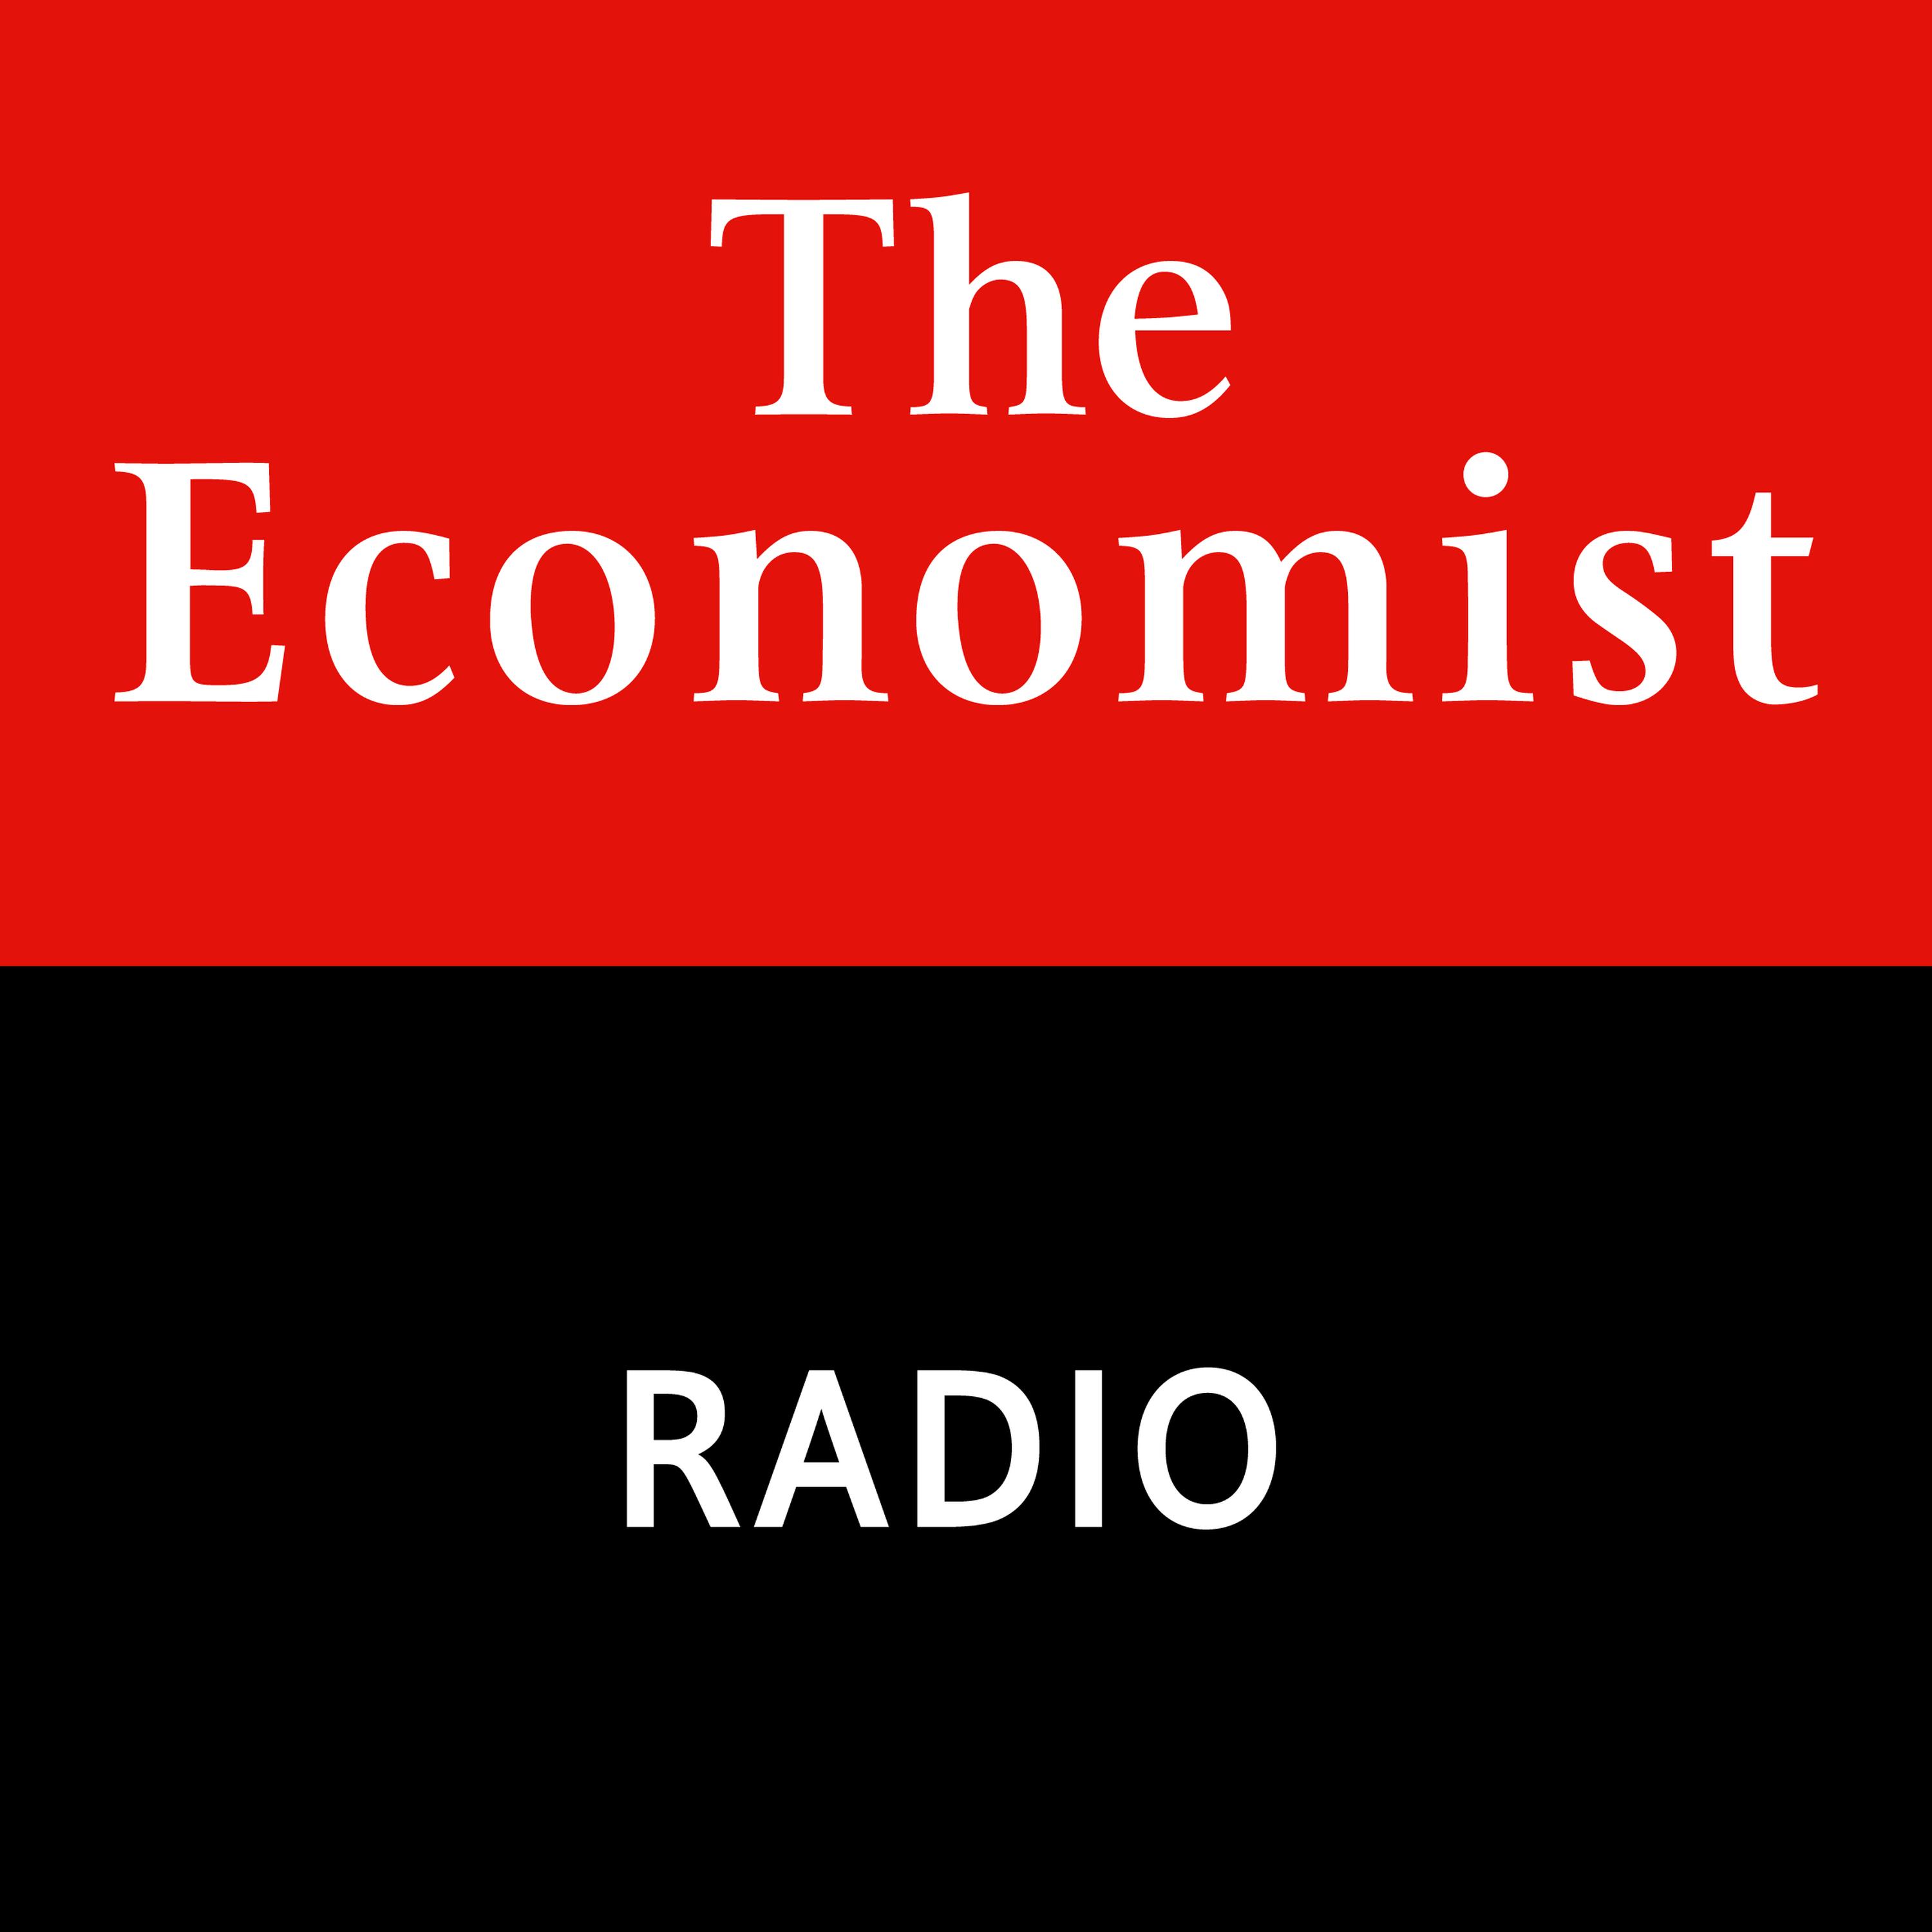 Economist audio edition download may 19 2018